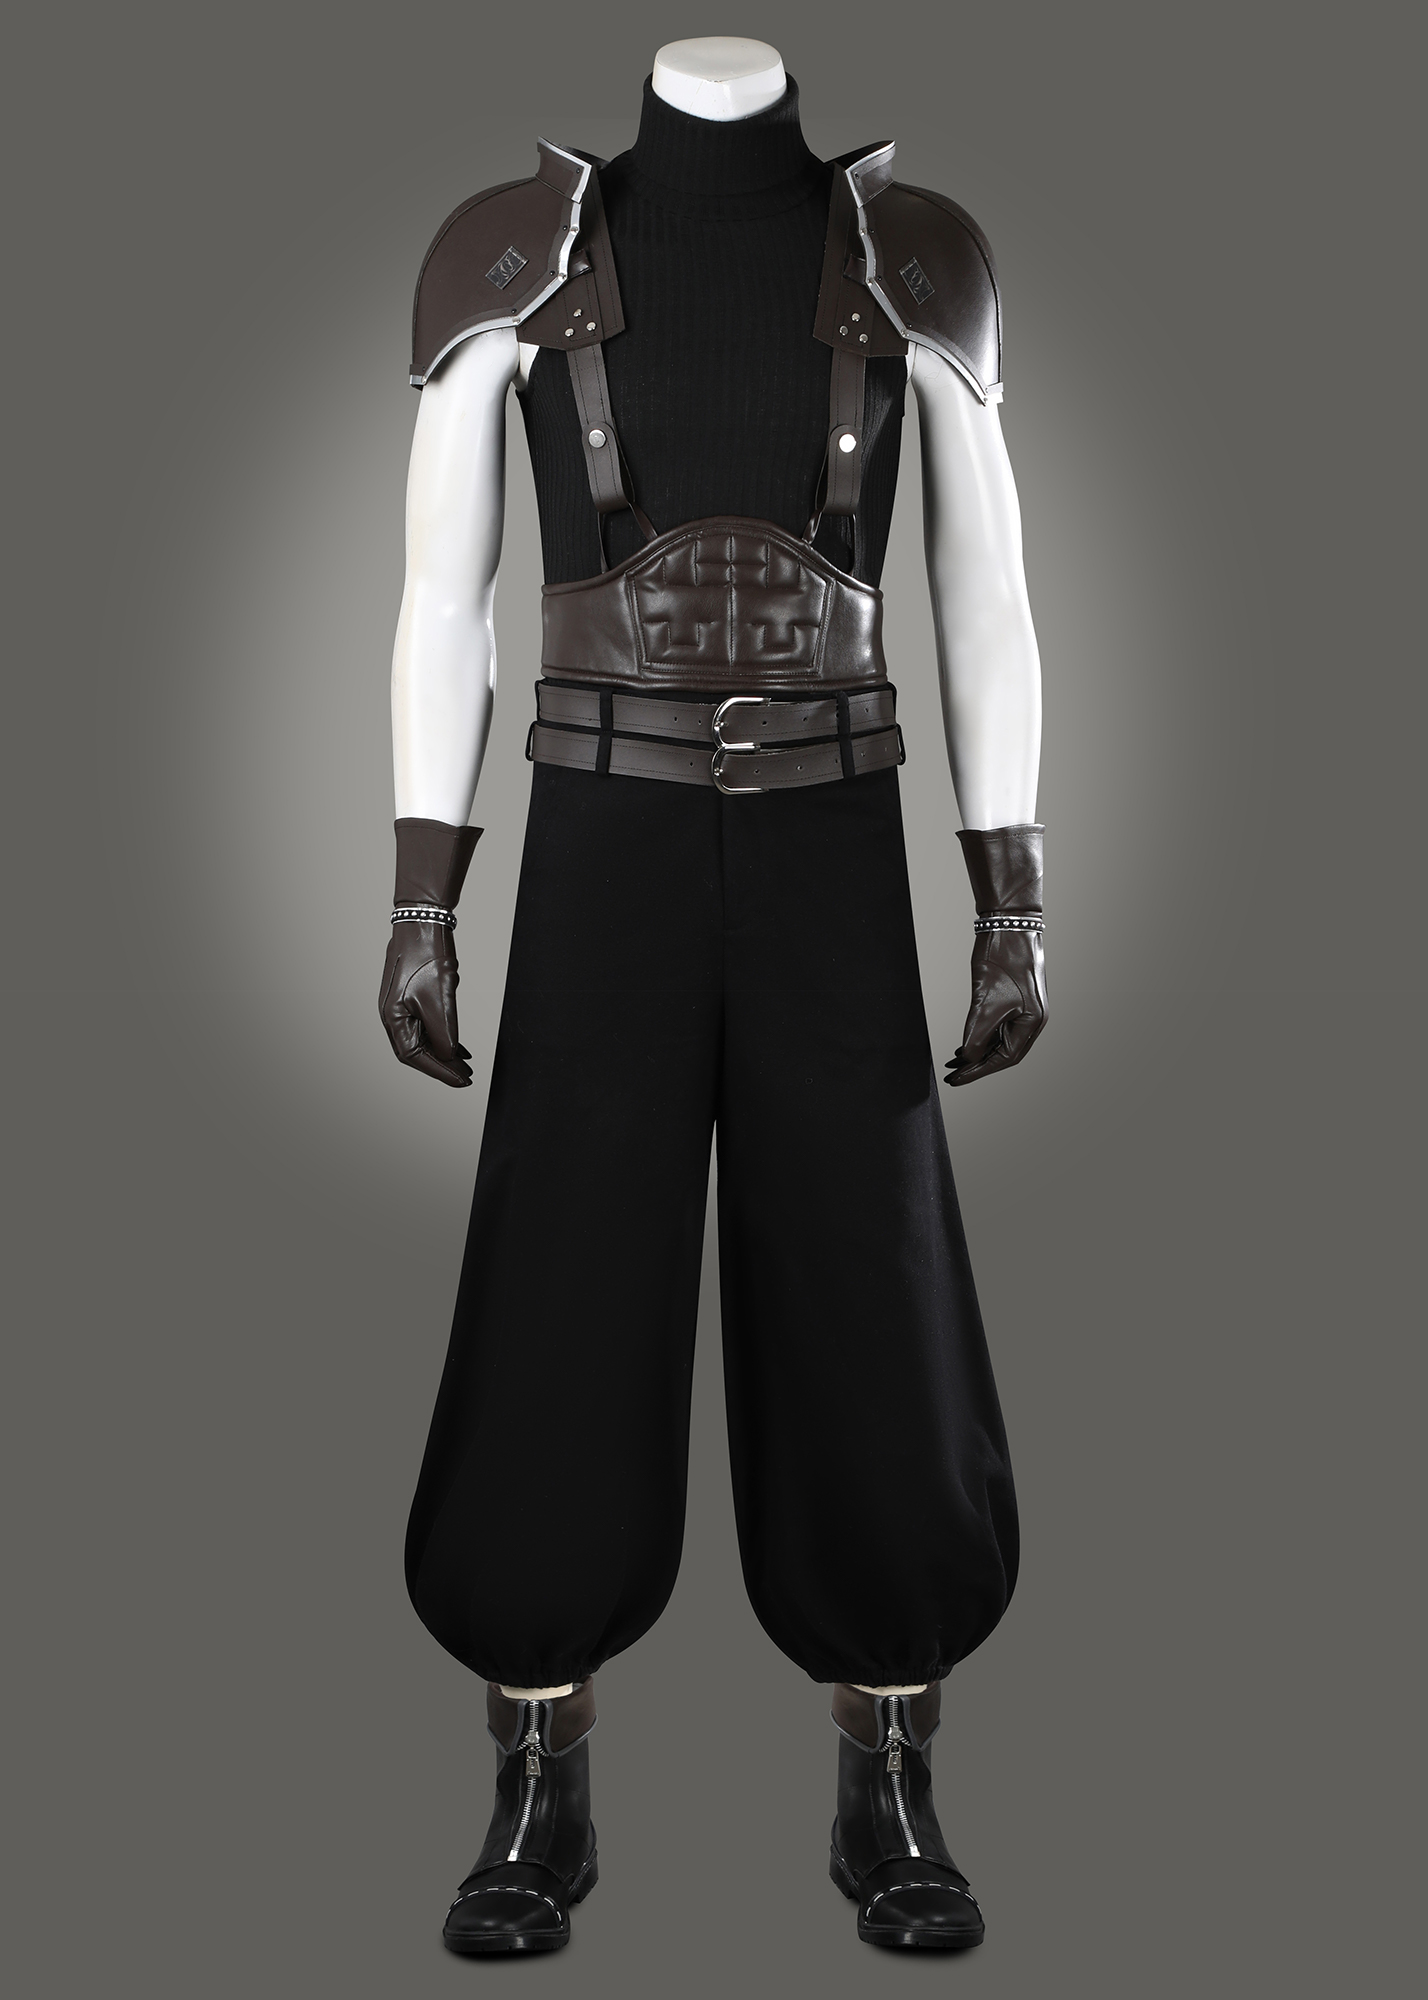 Zack Fair Costume Final Fantasy VII Rebirth Suit Cosplay